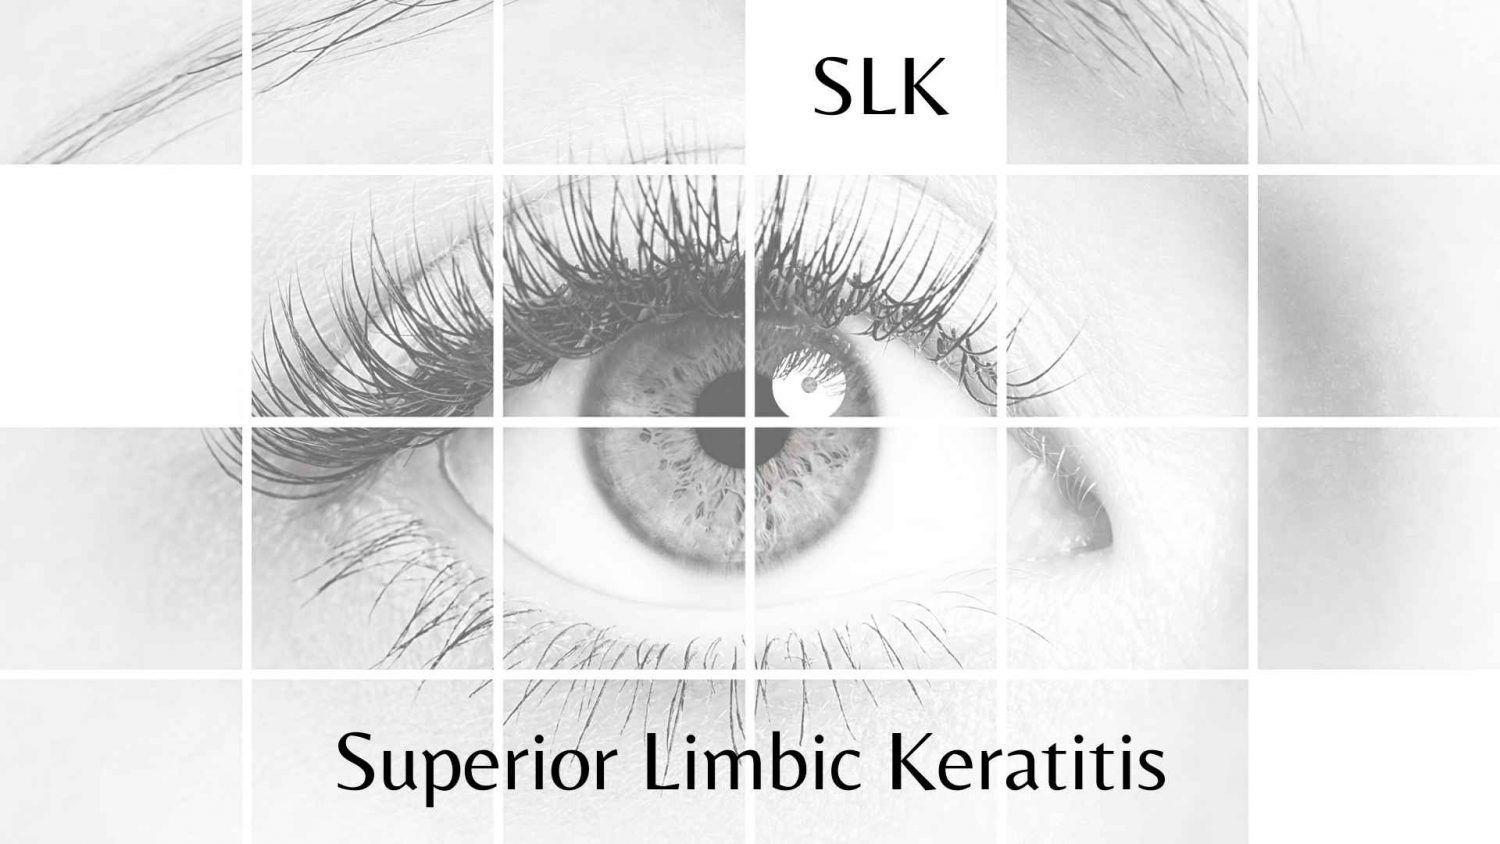 Superior Limbic Keratitis - SLK